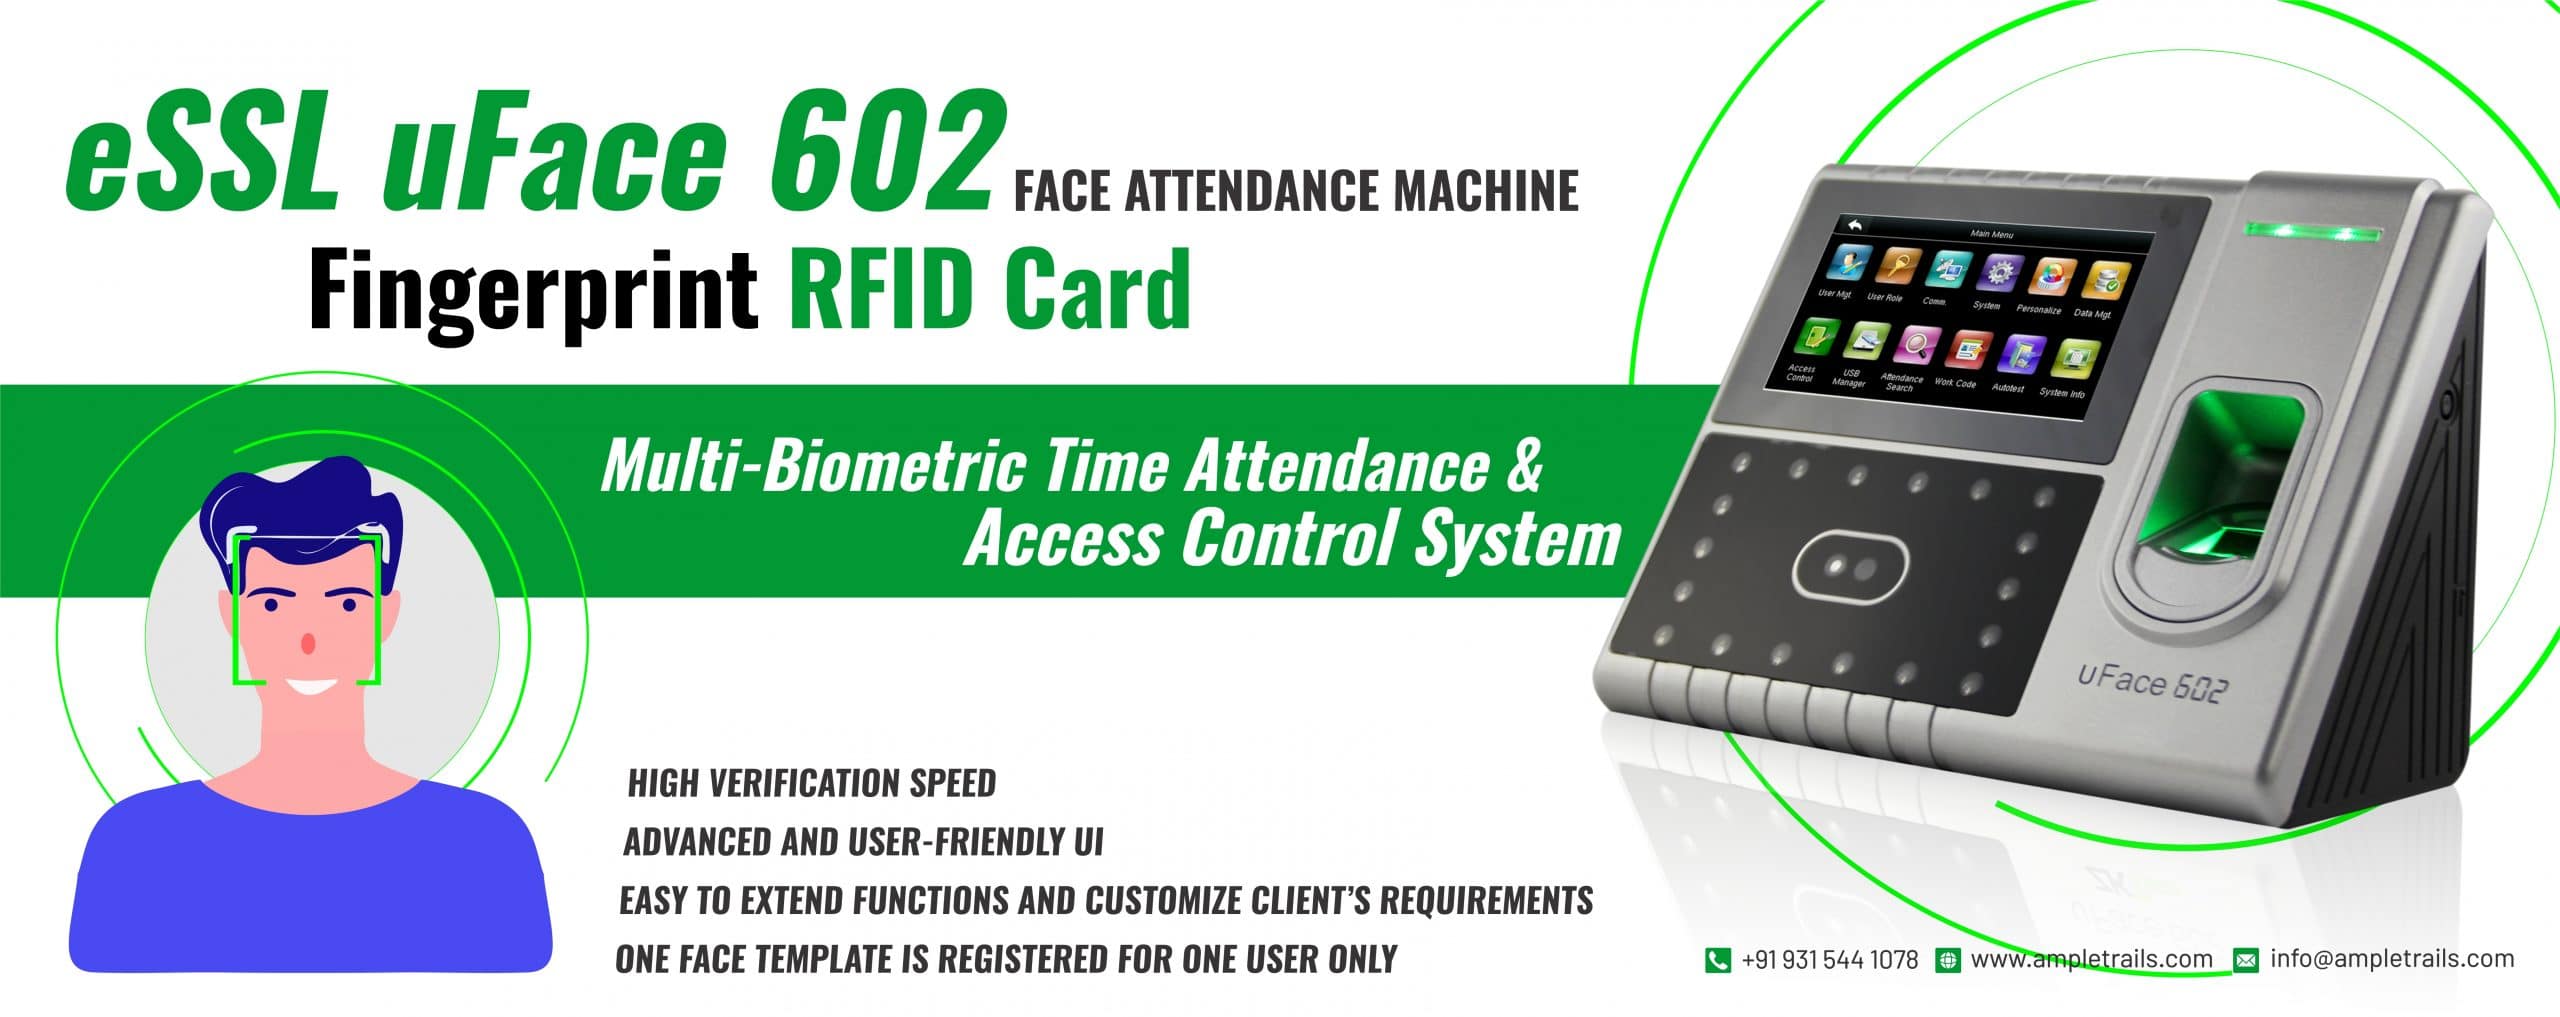 eSSL Uface 602 Face Attendance Machine